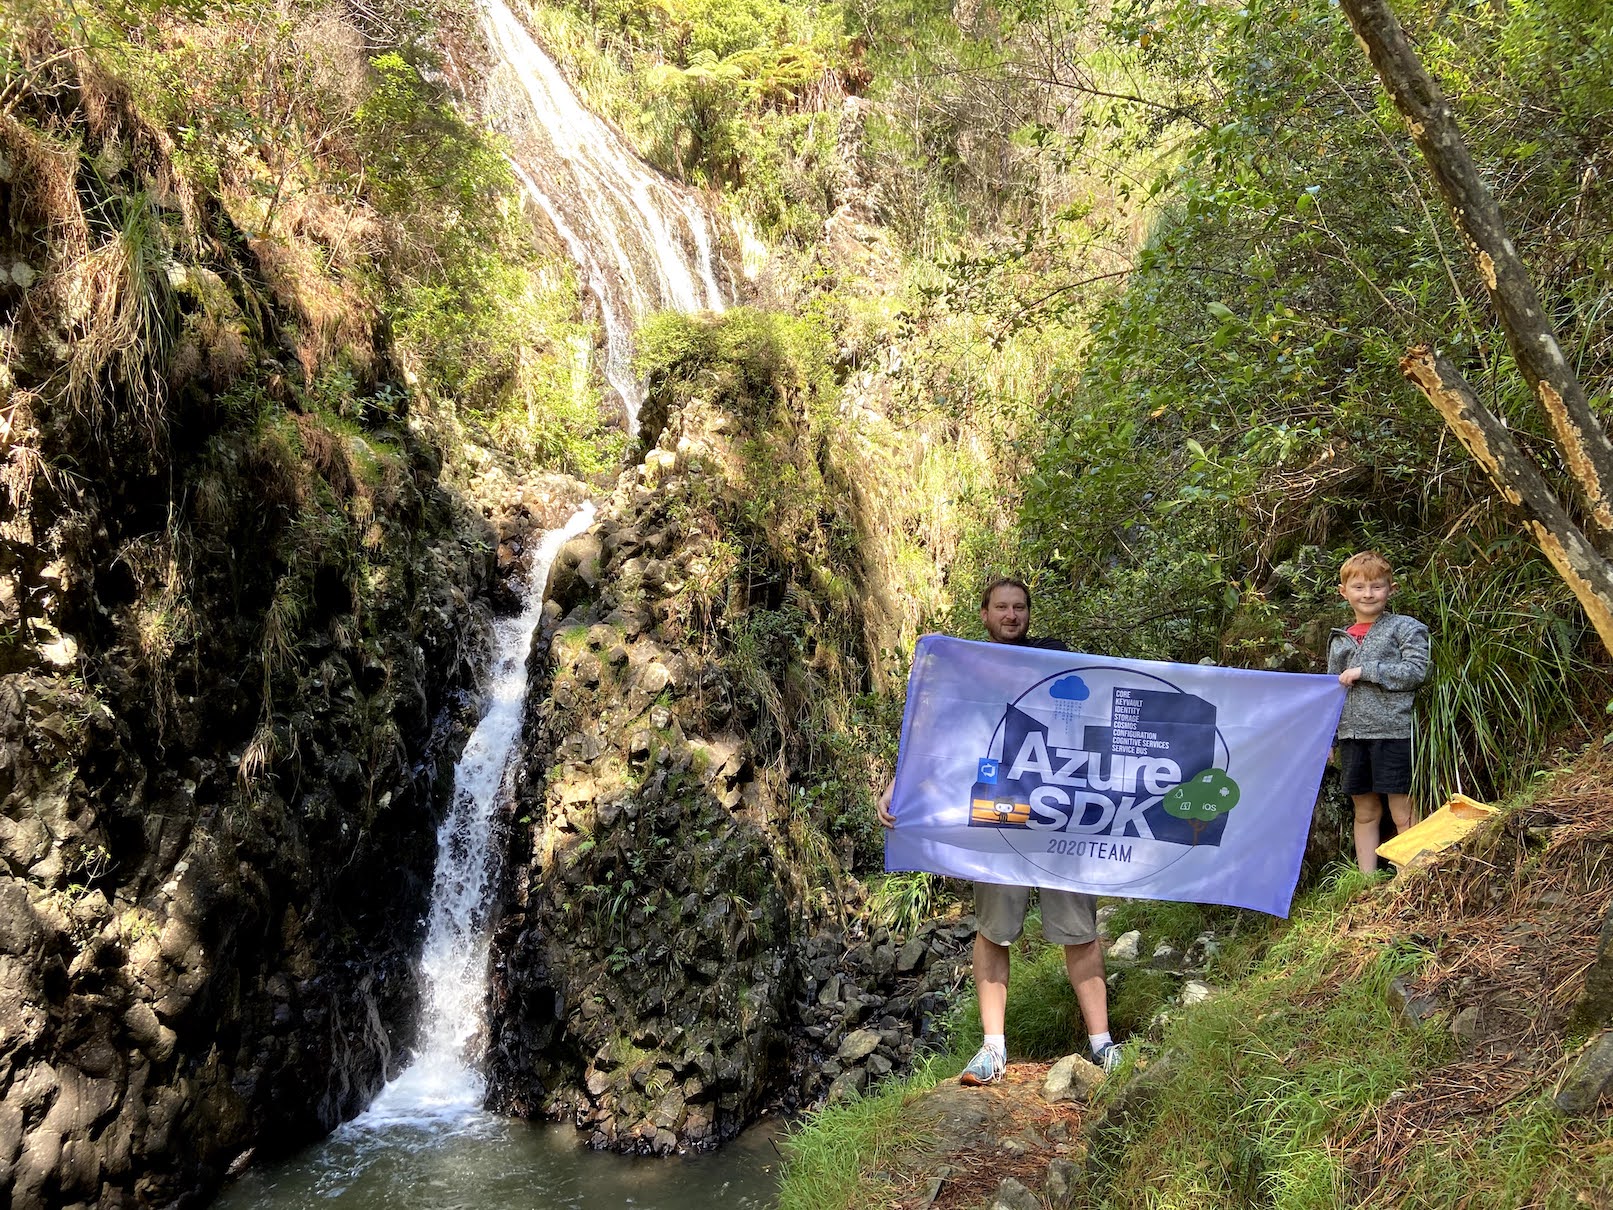 Waving the Azure SDK flag in Coromandel, New Zealand